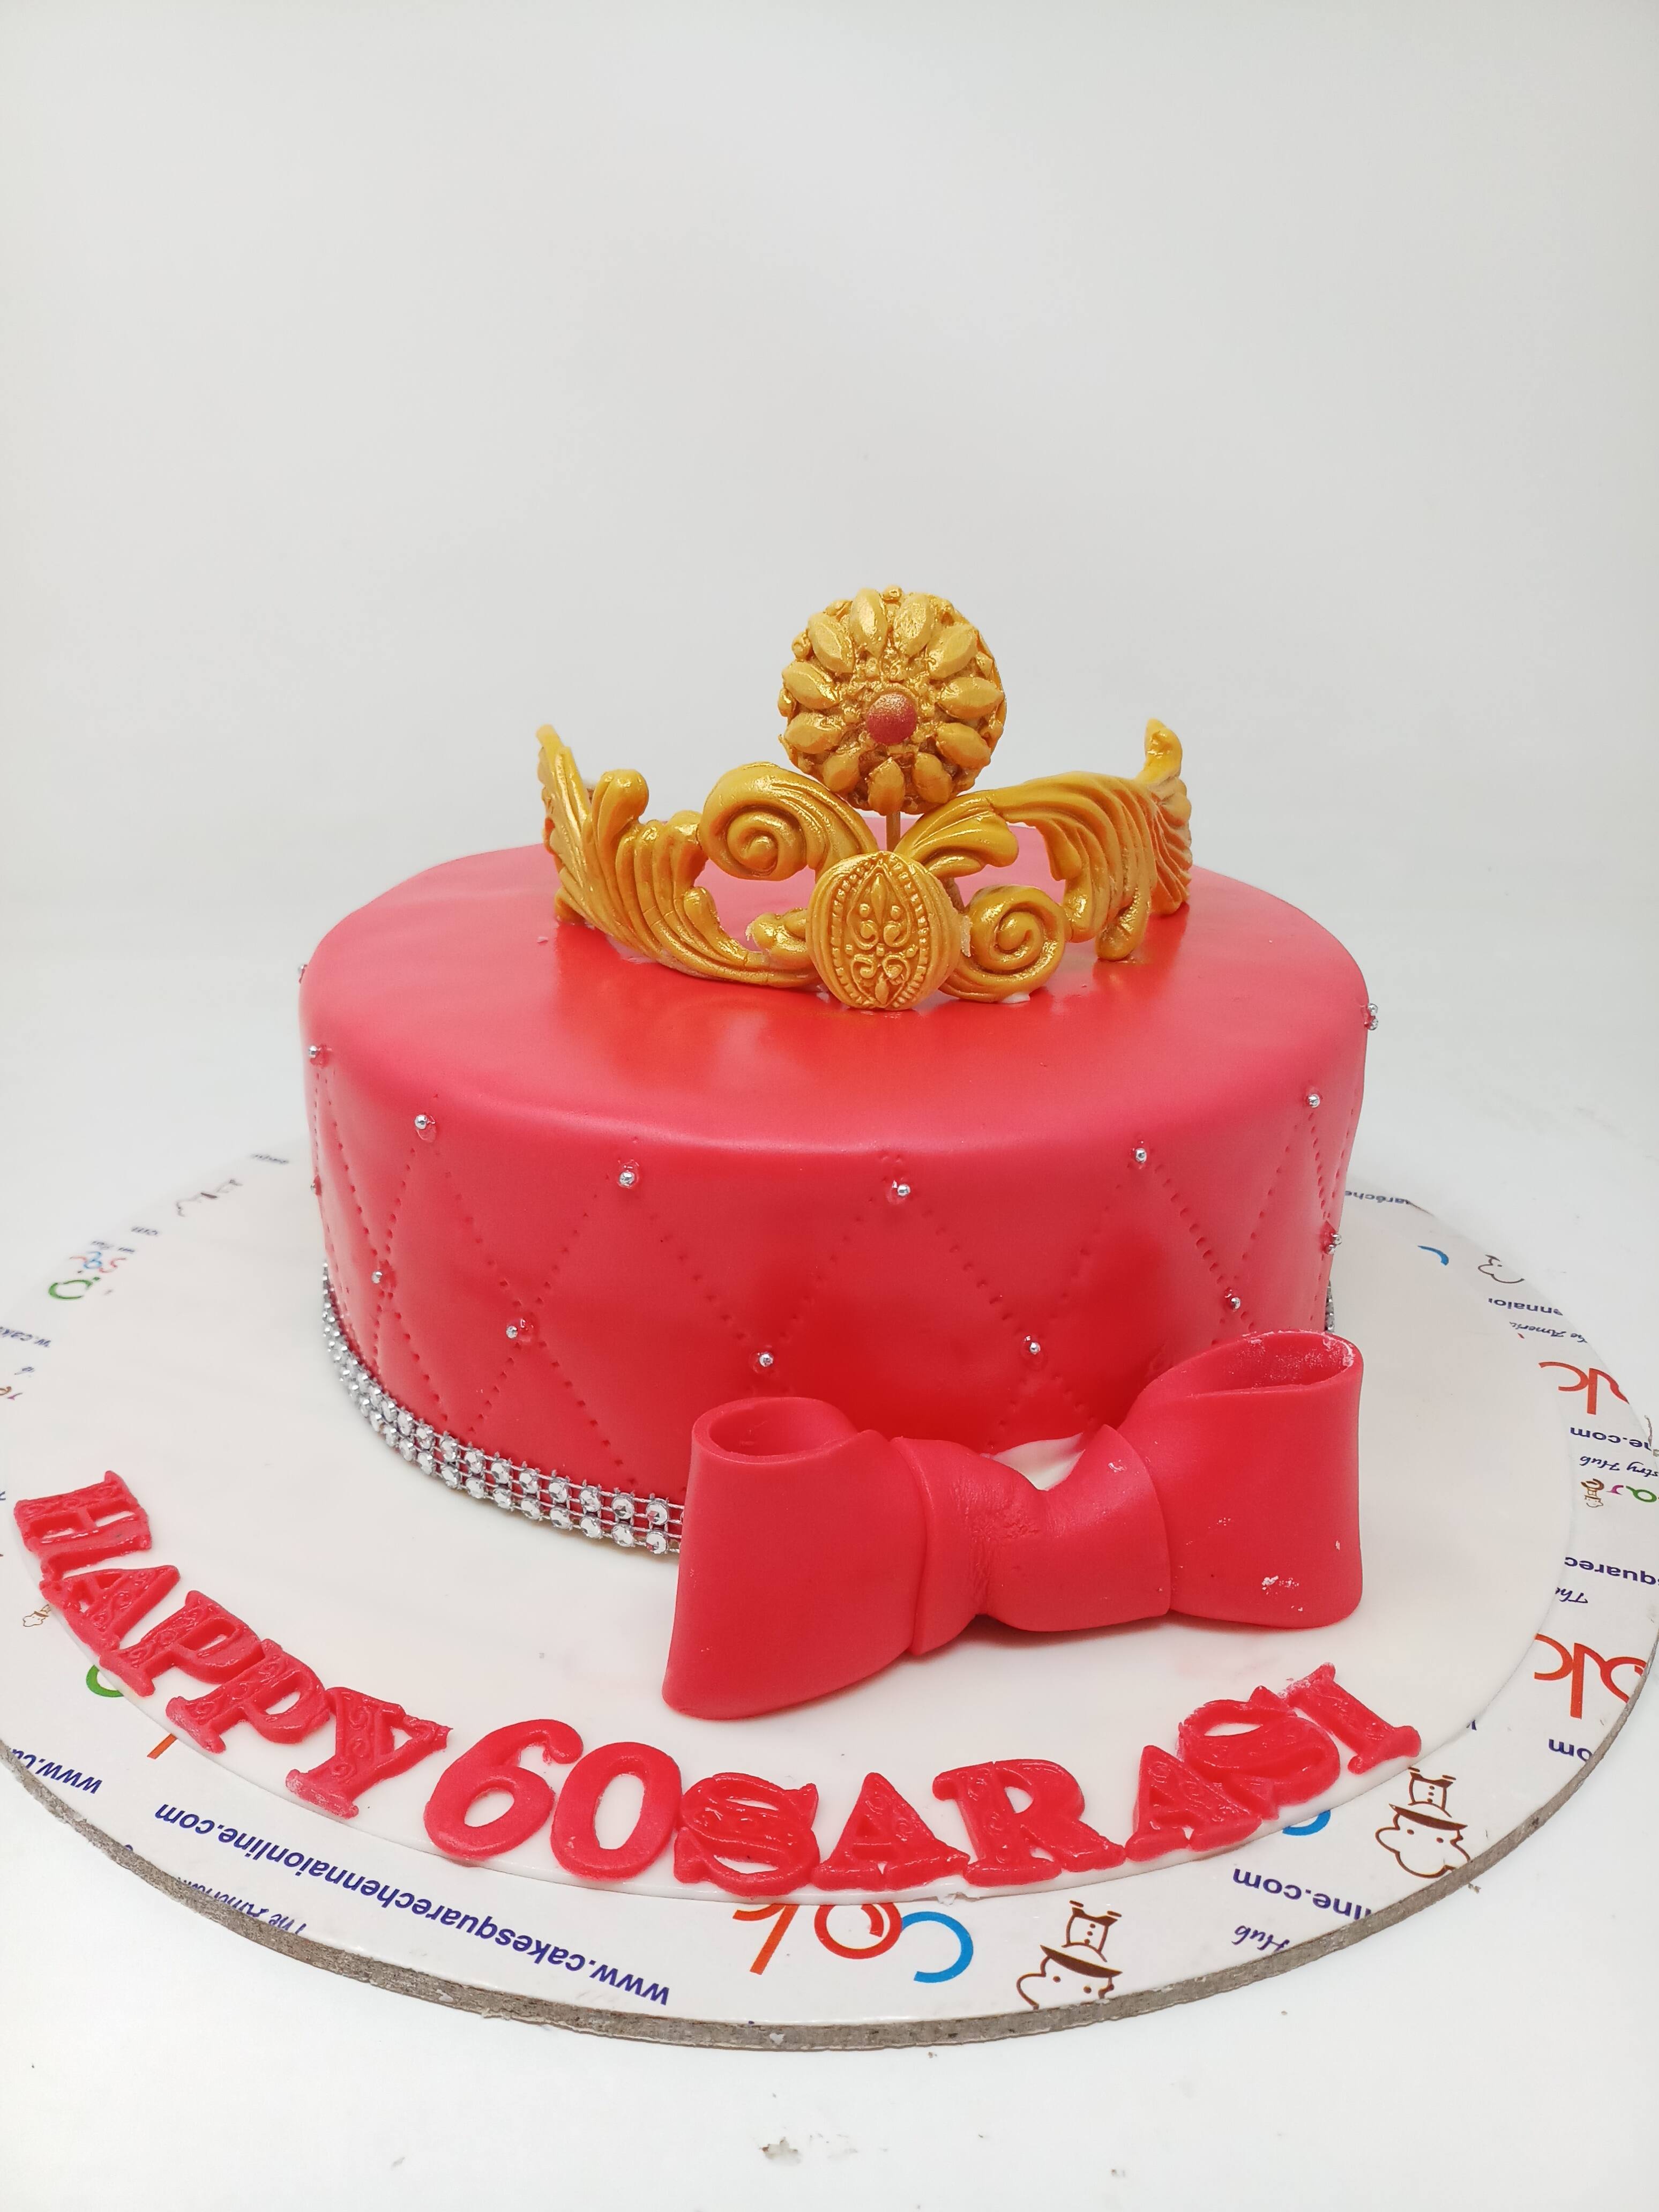 Share more than 85 cake square mugalivakkam best  indaotaonec